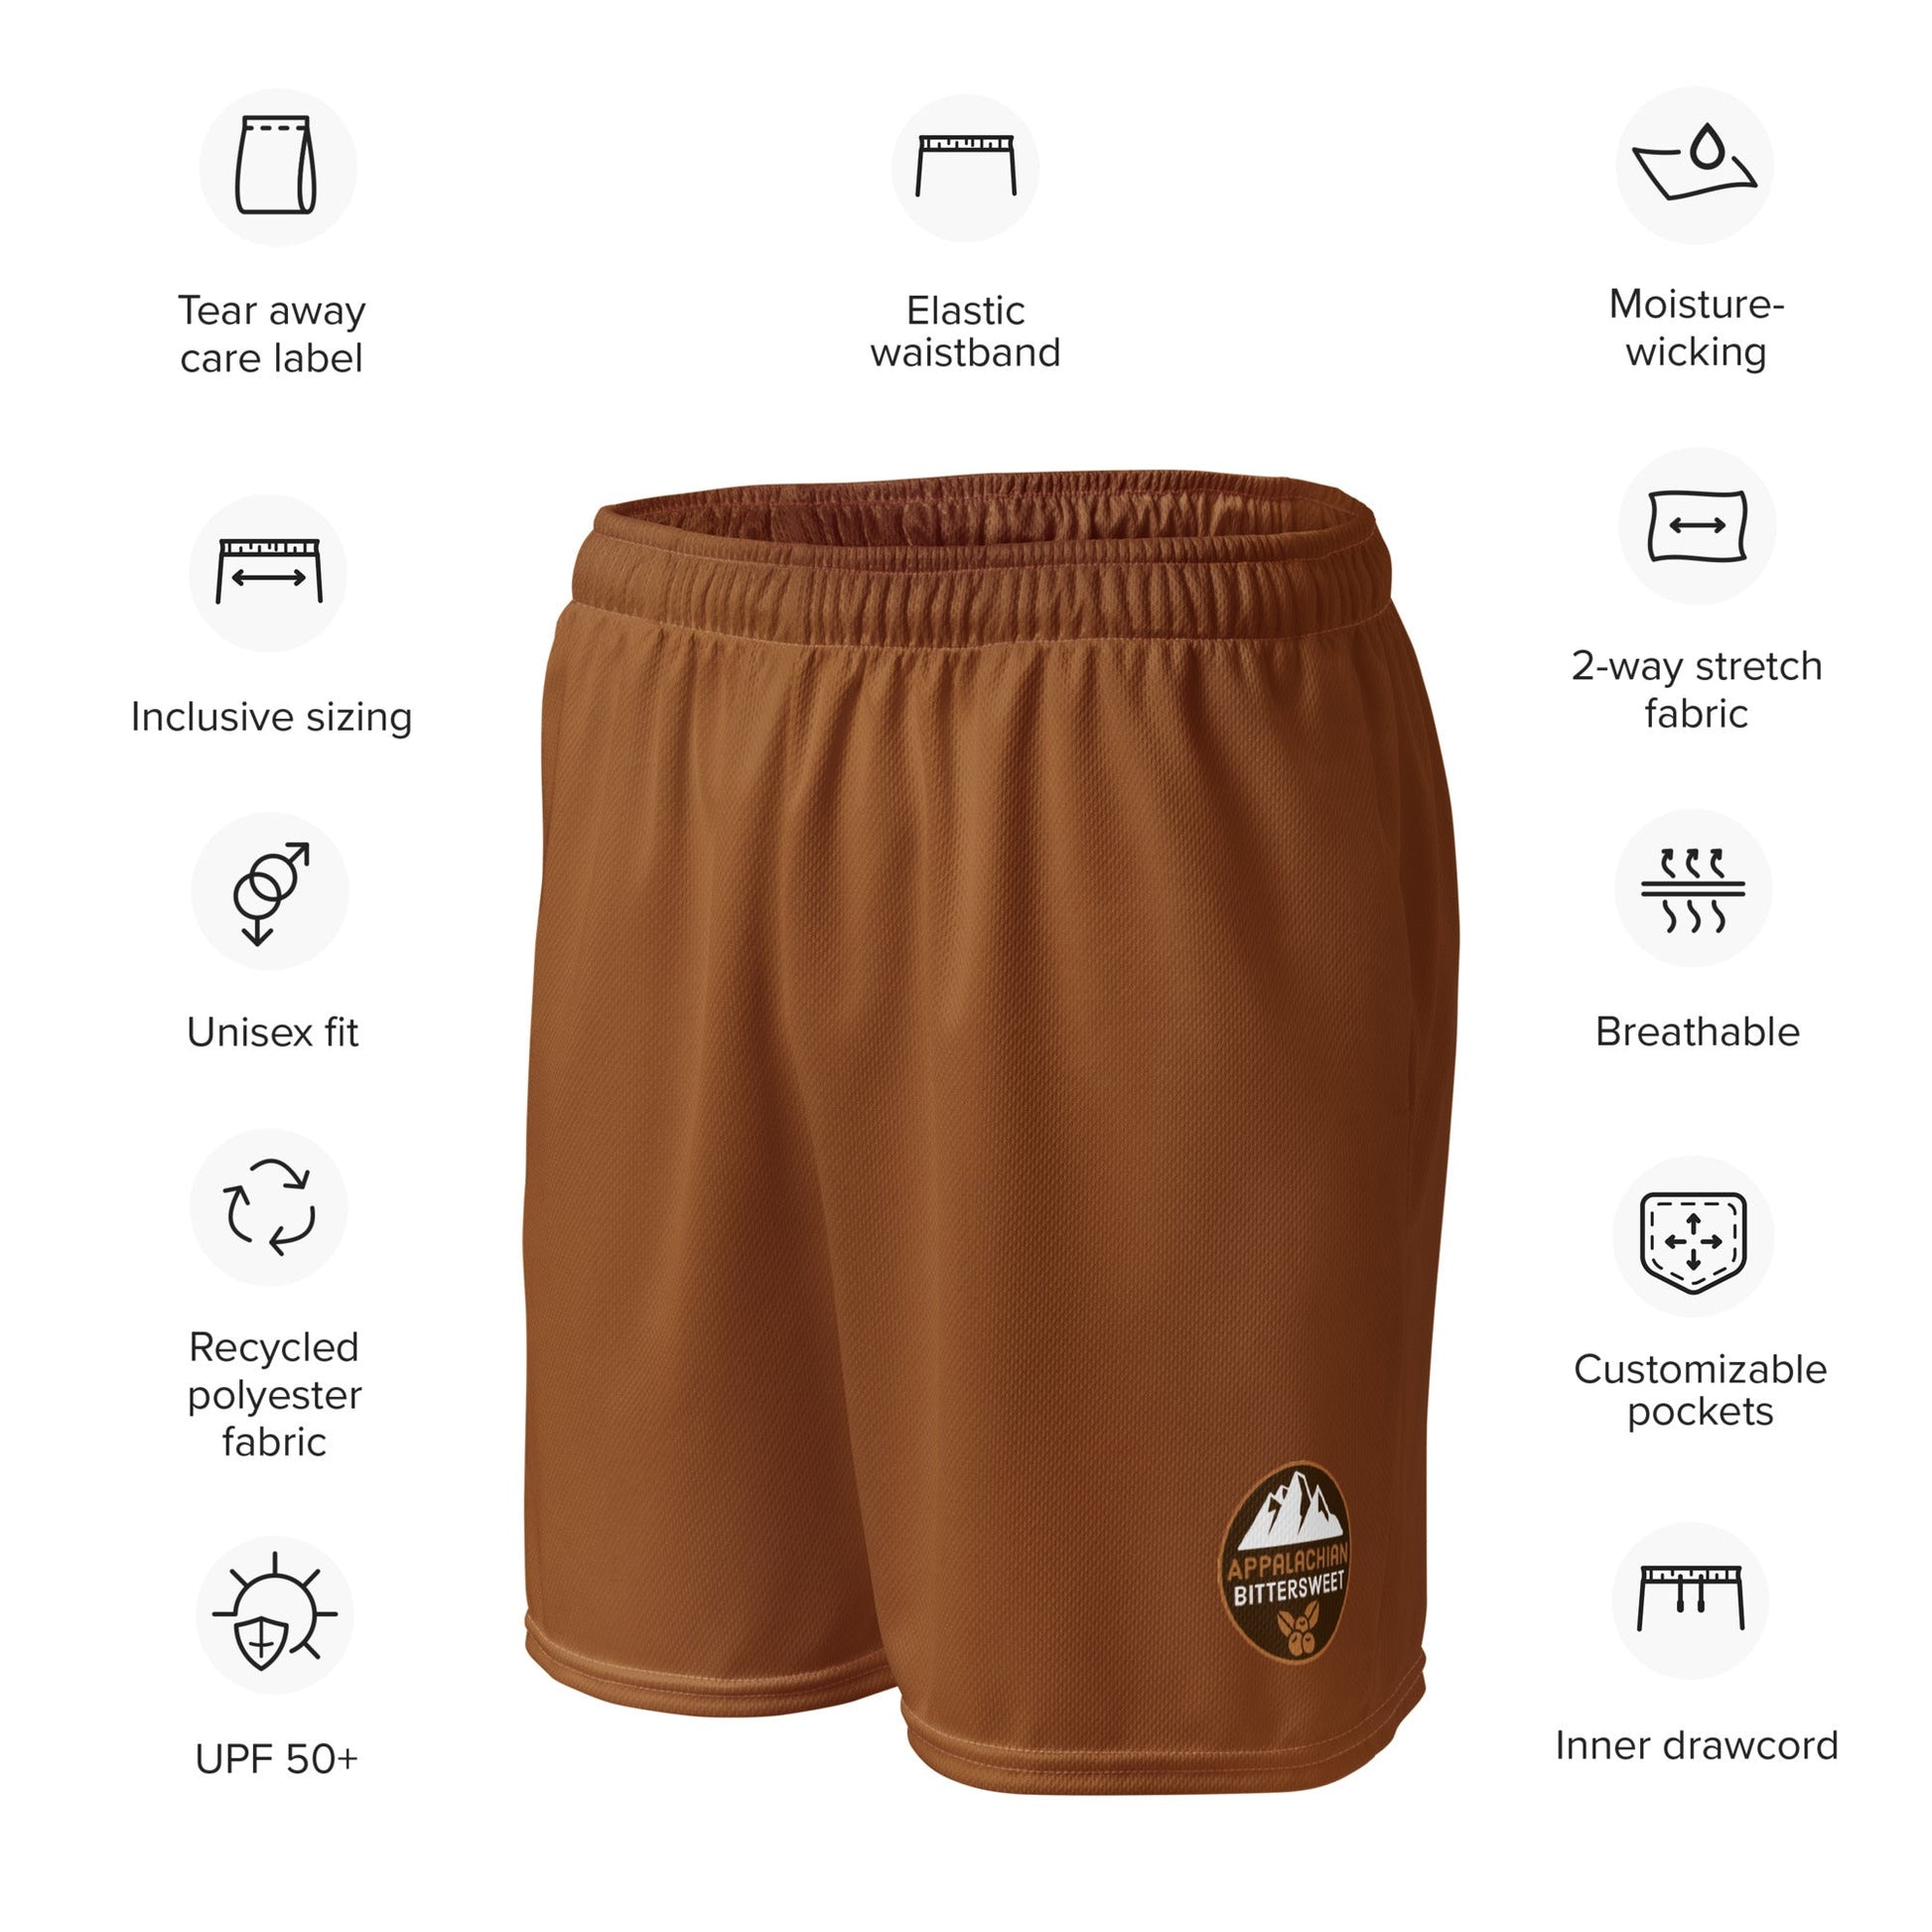 Copper Recycled Unisex Comfort Mesh Hiking Shorts - Appalachian Bittersweet - Shorts